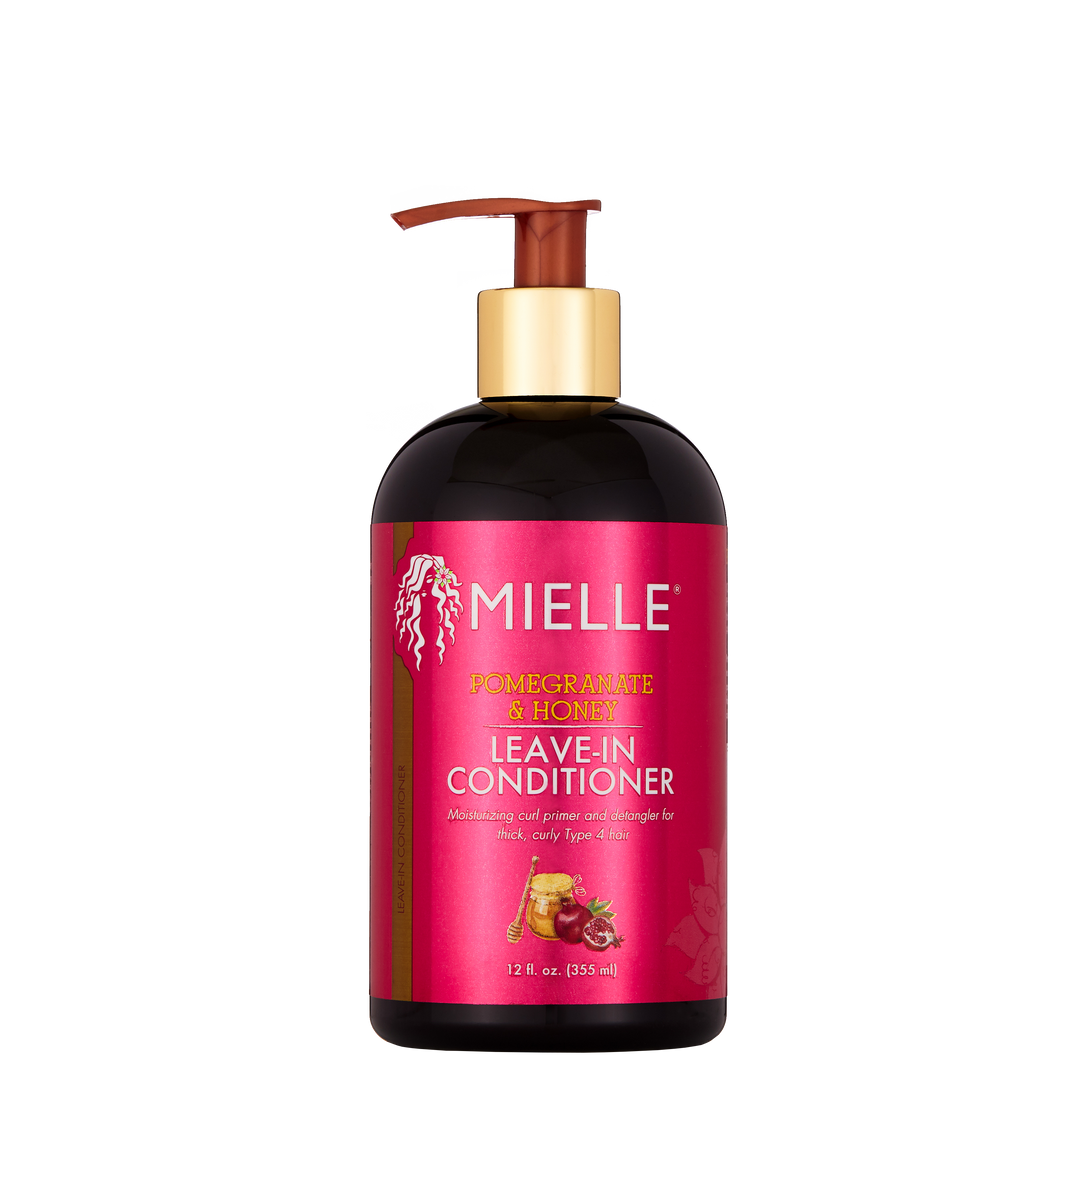 Mielle Organics Oats & Honey Leave-In Spray